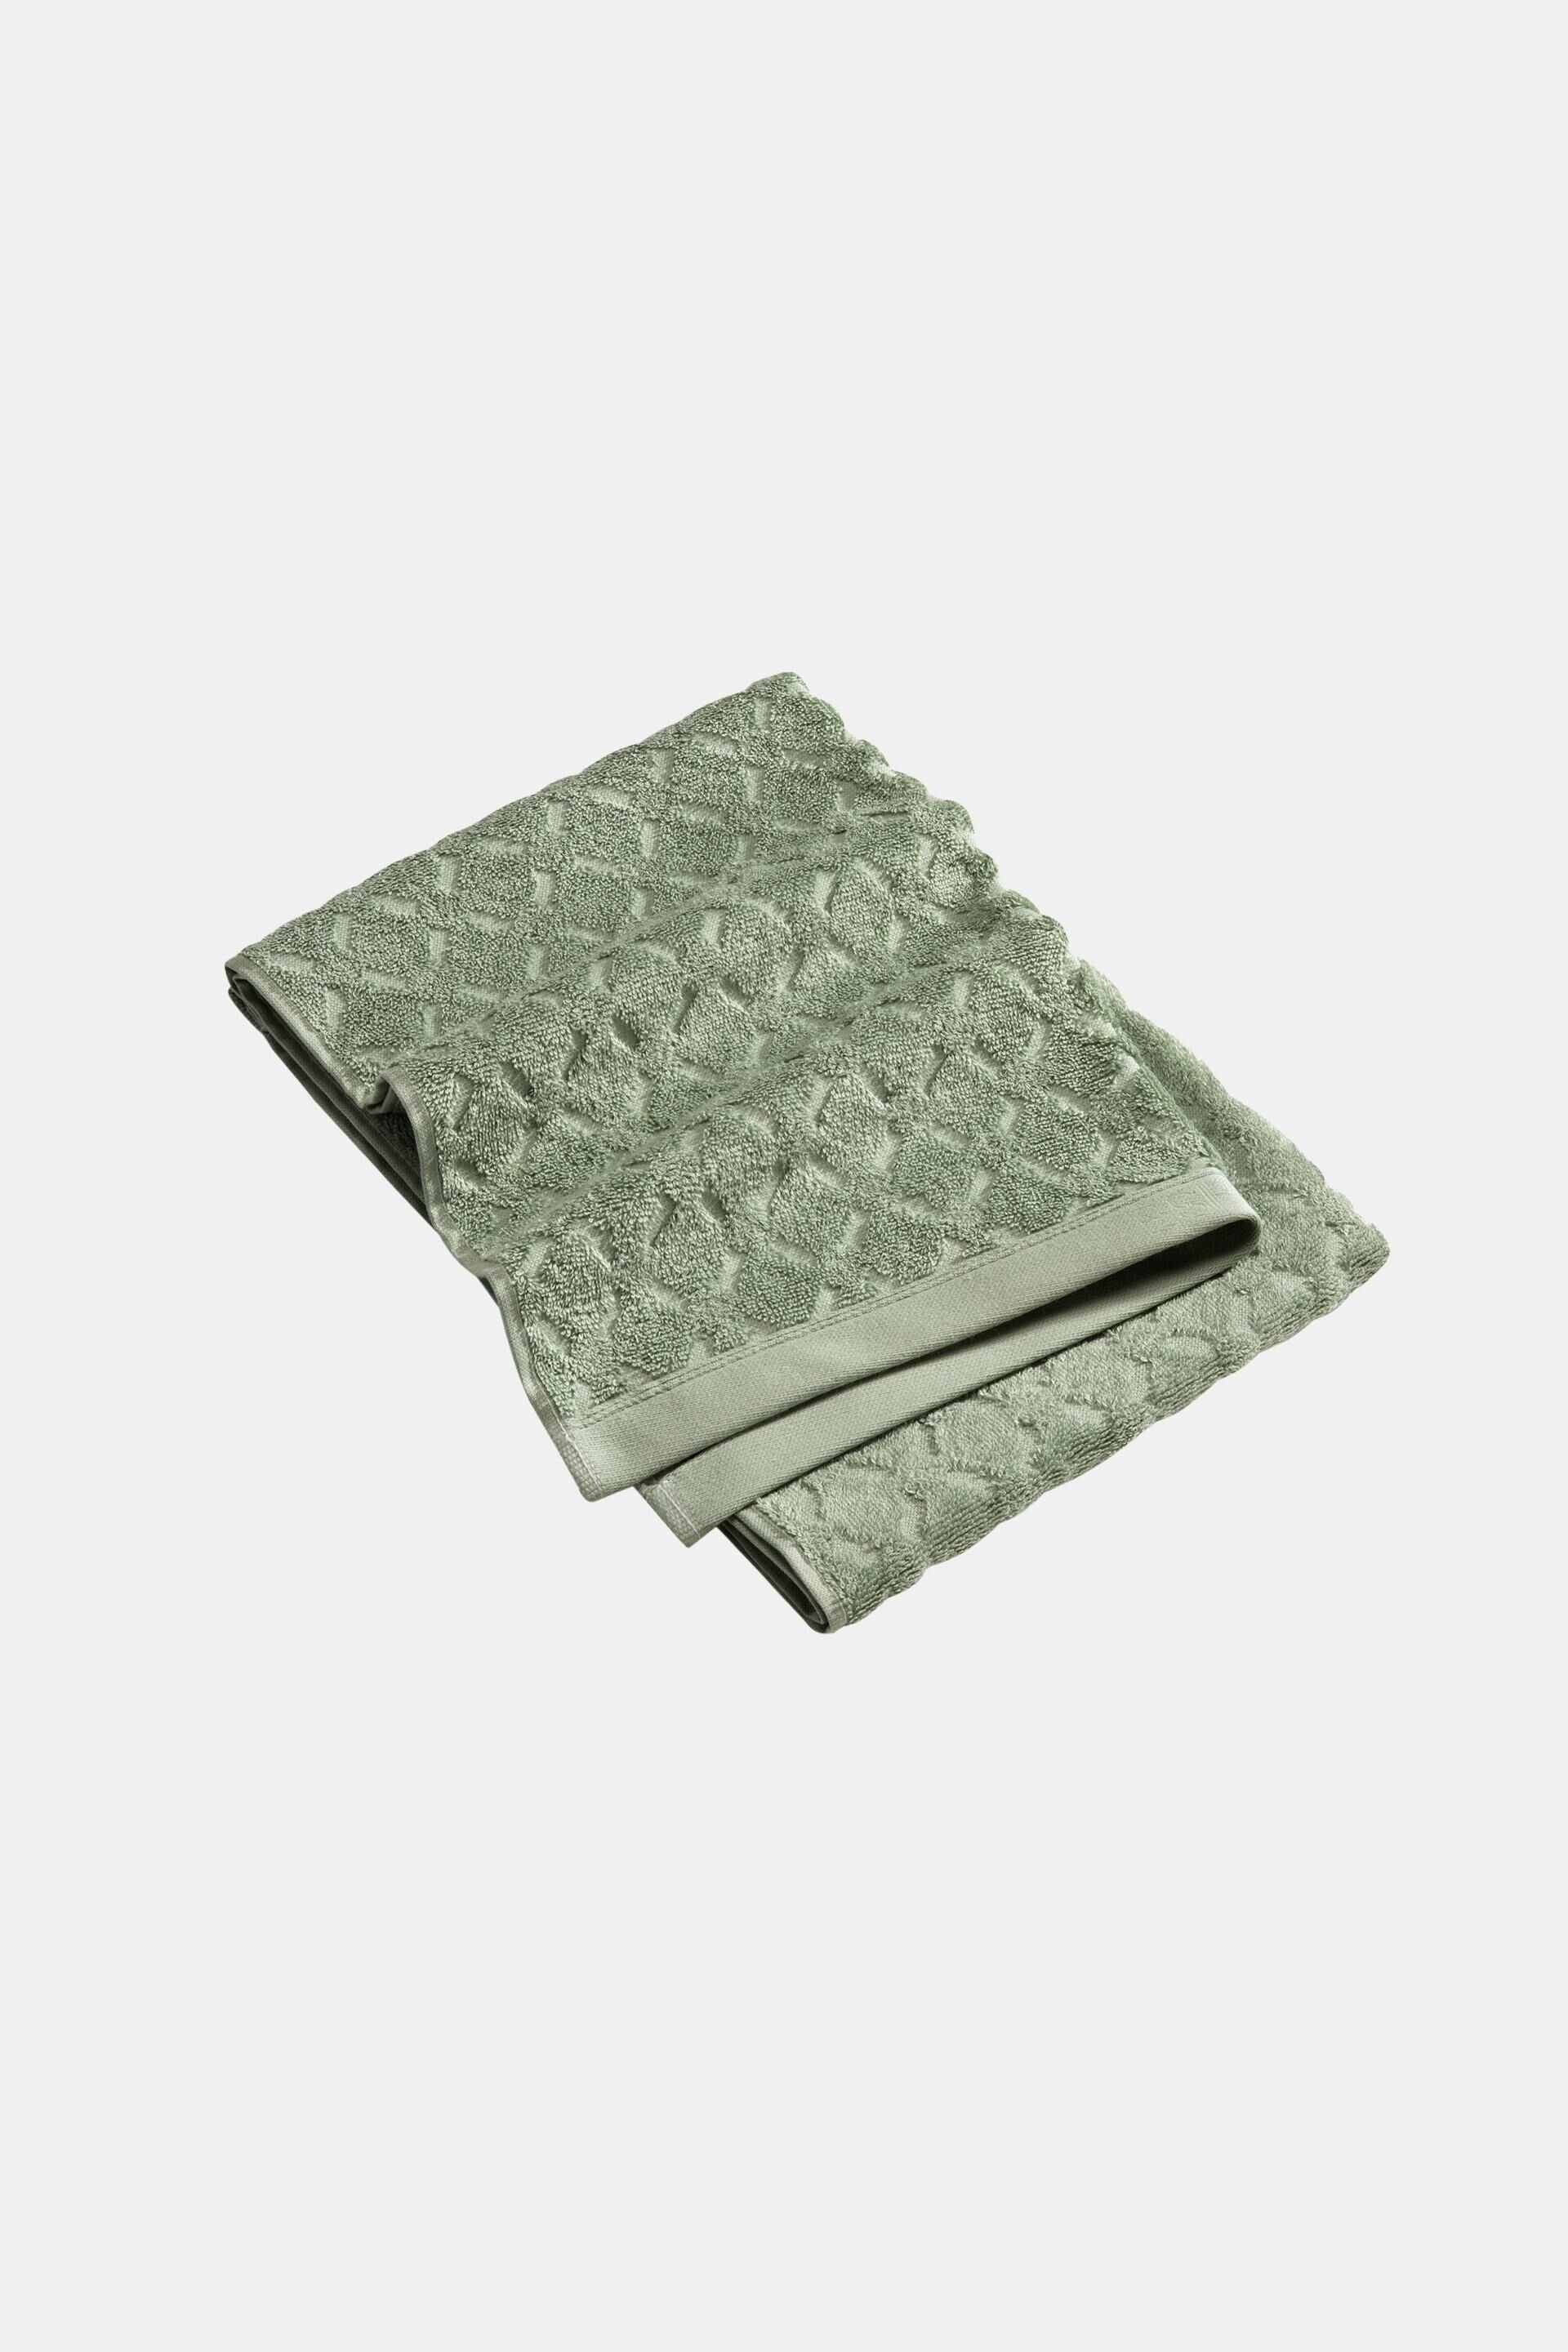 Esprit cotton 100% made organic Towel of